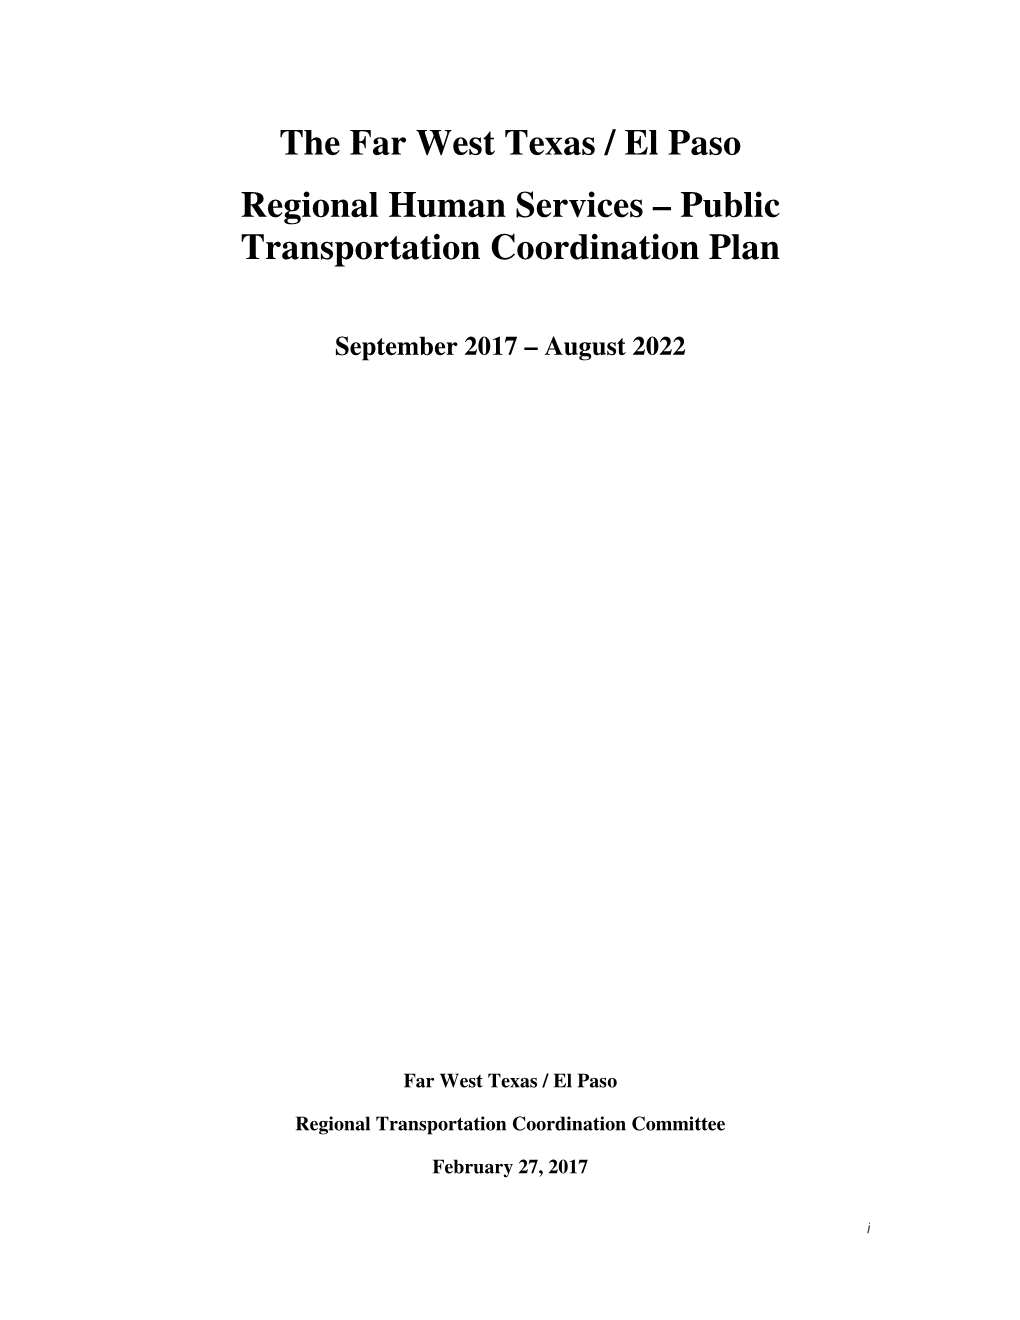 The Far West Texas / El Paso Regional Human Services – Public Transportation Coordination Plan